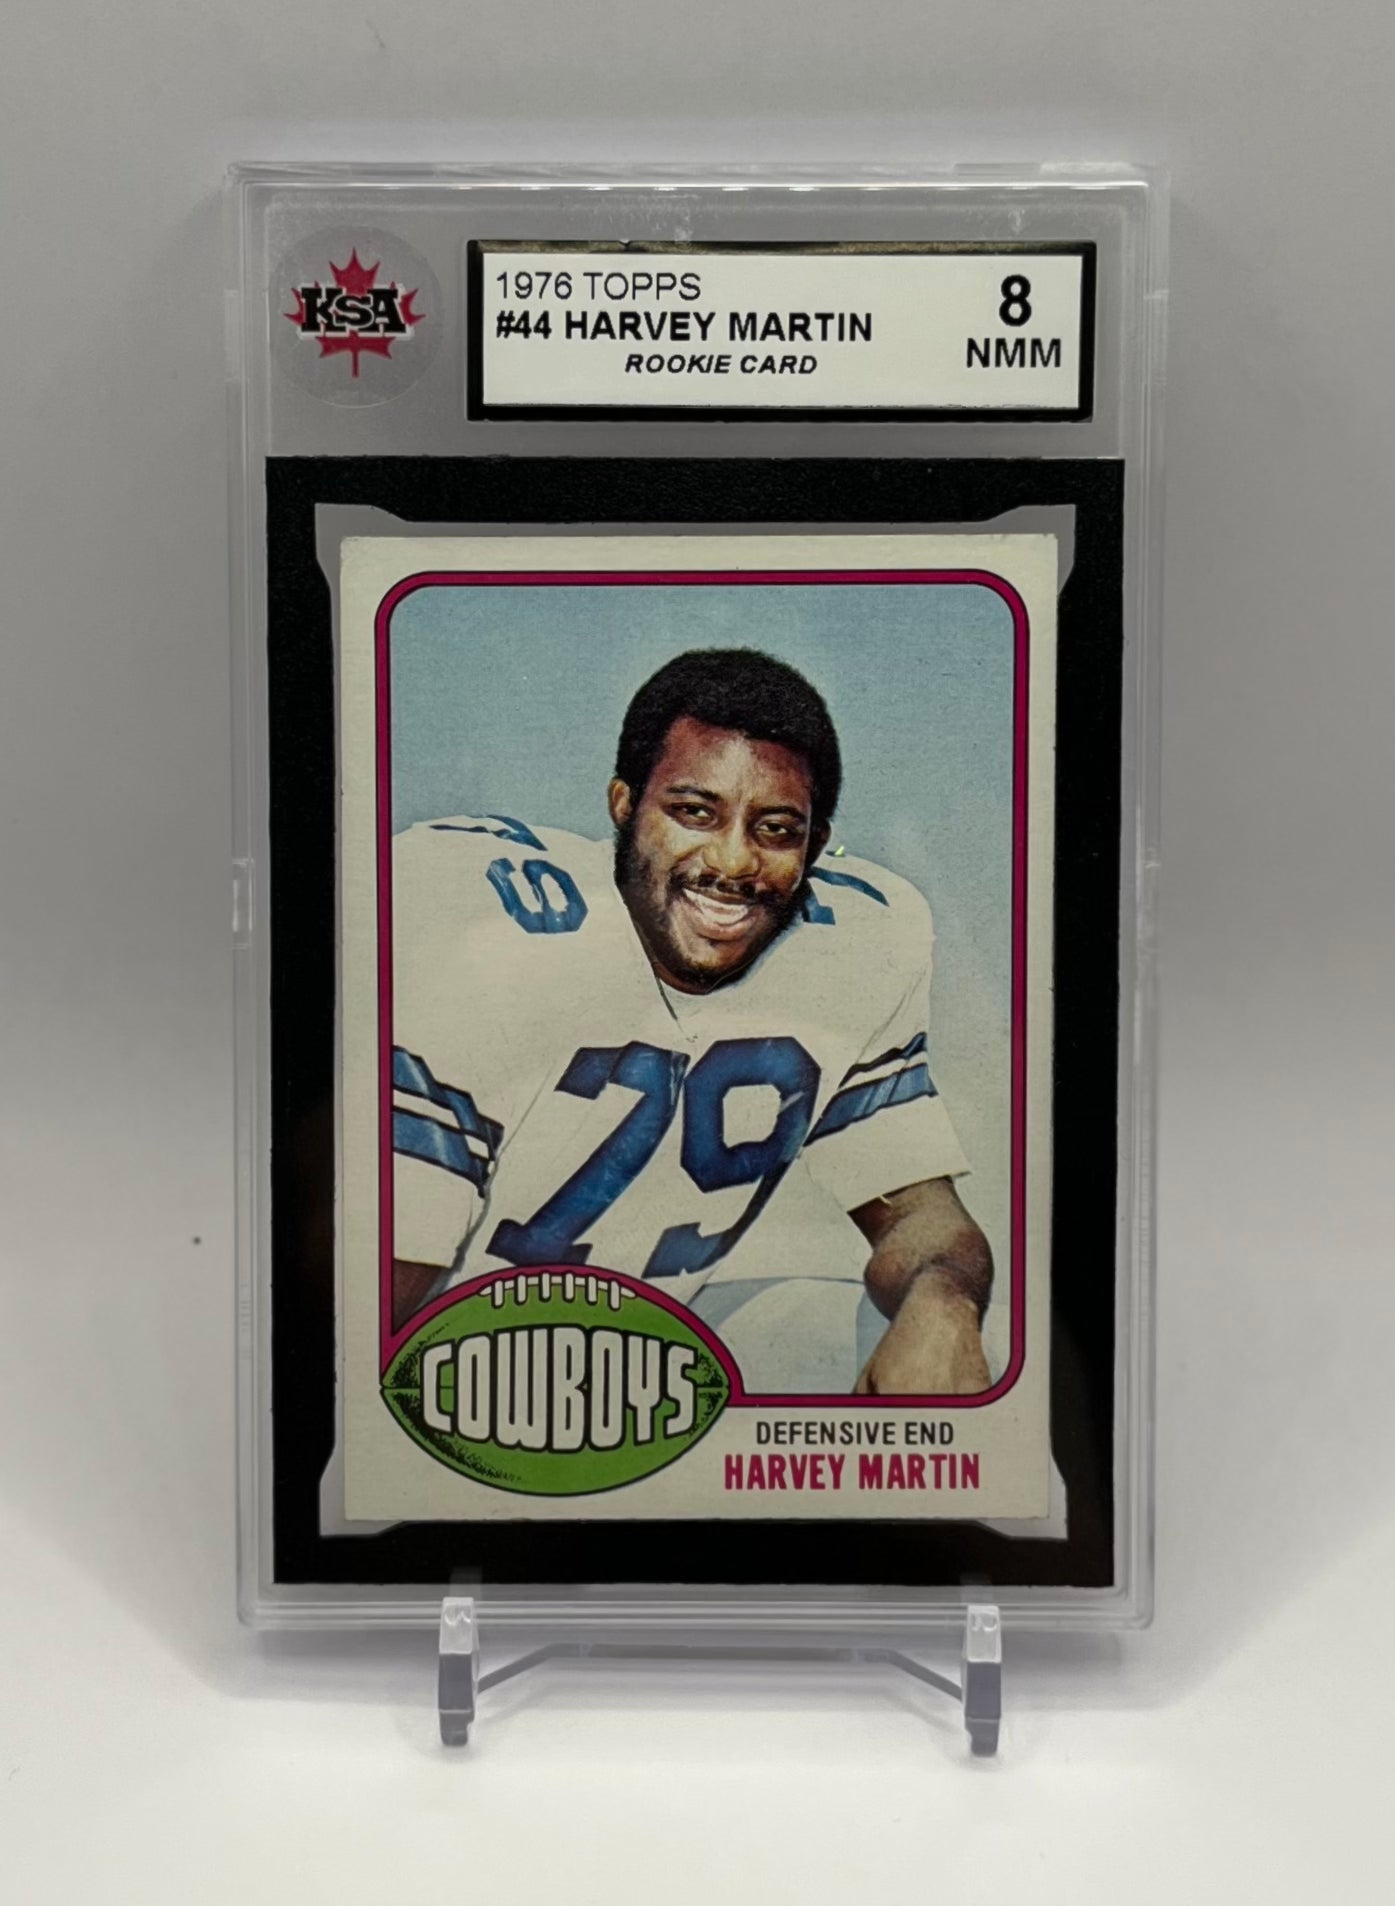 1976 #44 HARVEY MARTIN TOPPS - KSA 8 NMM